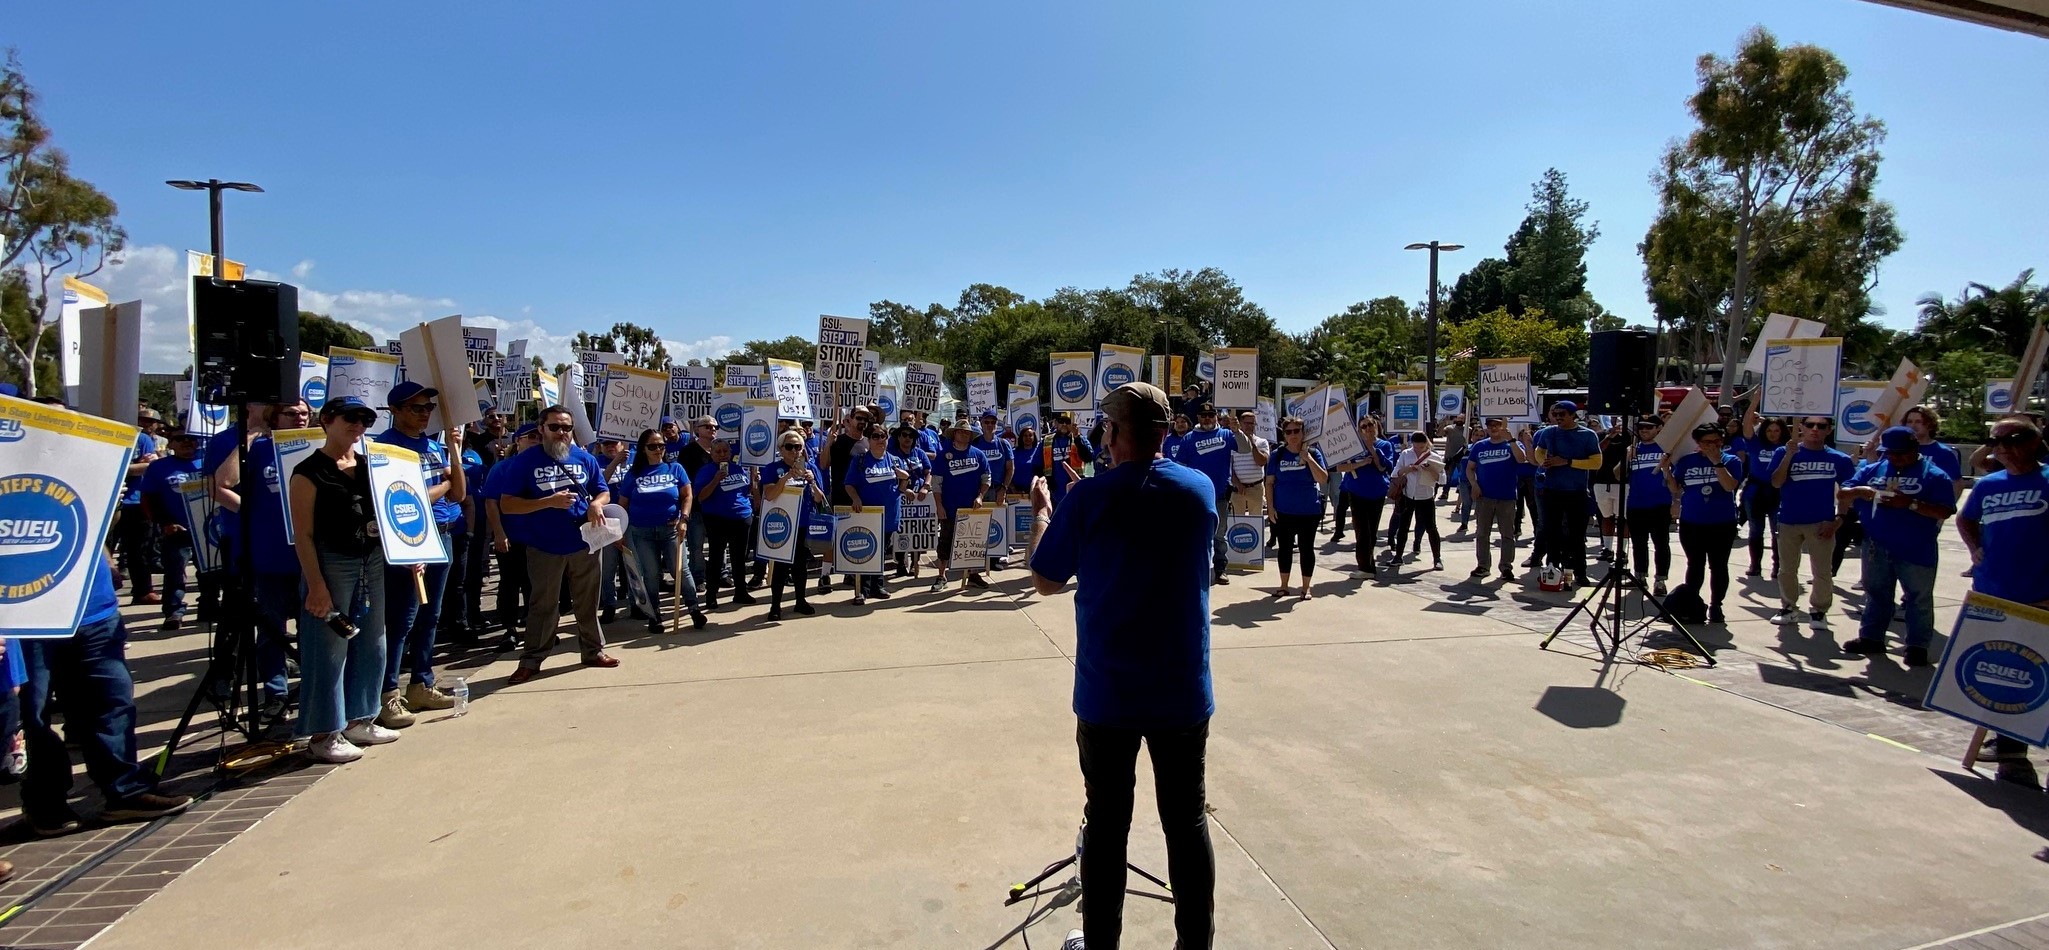 Rally at CSU Long Beach